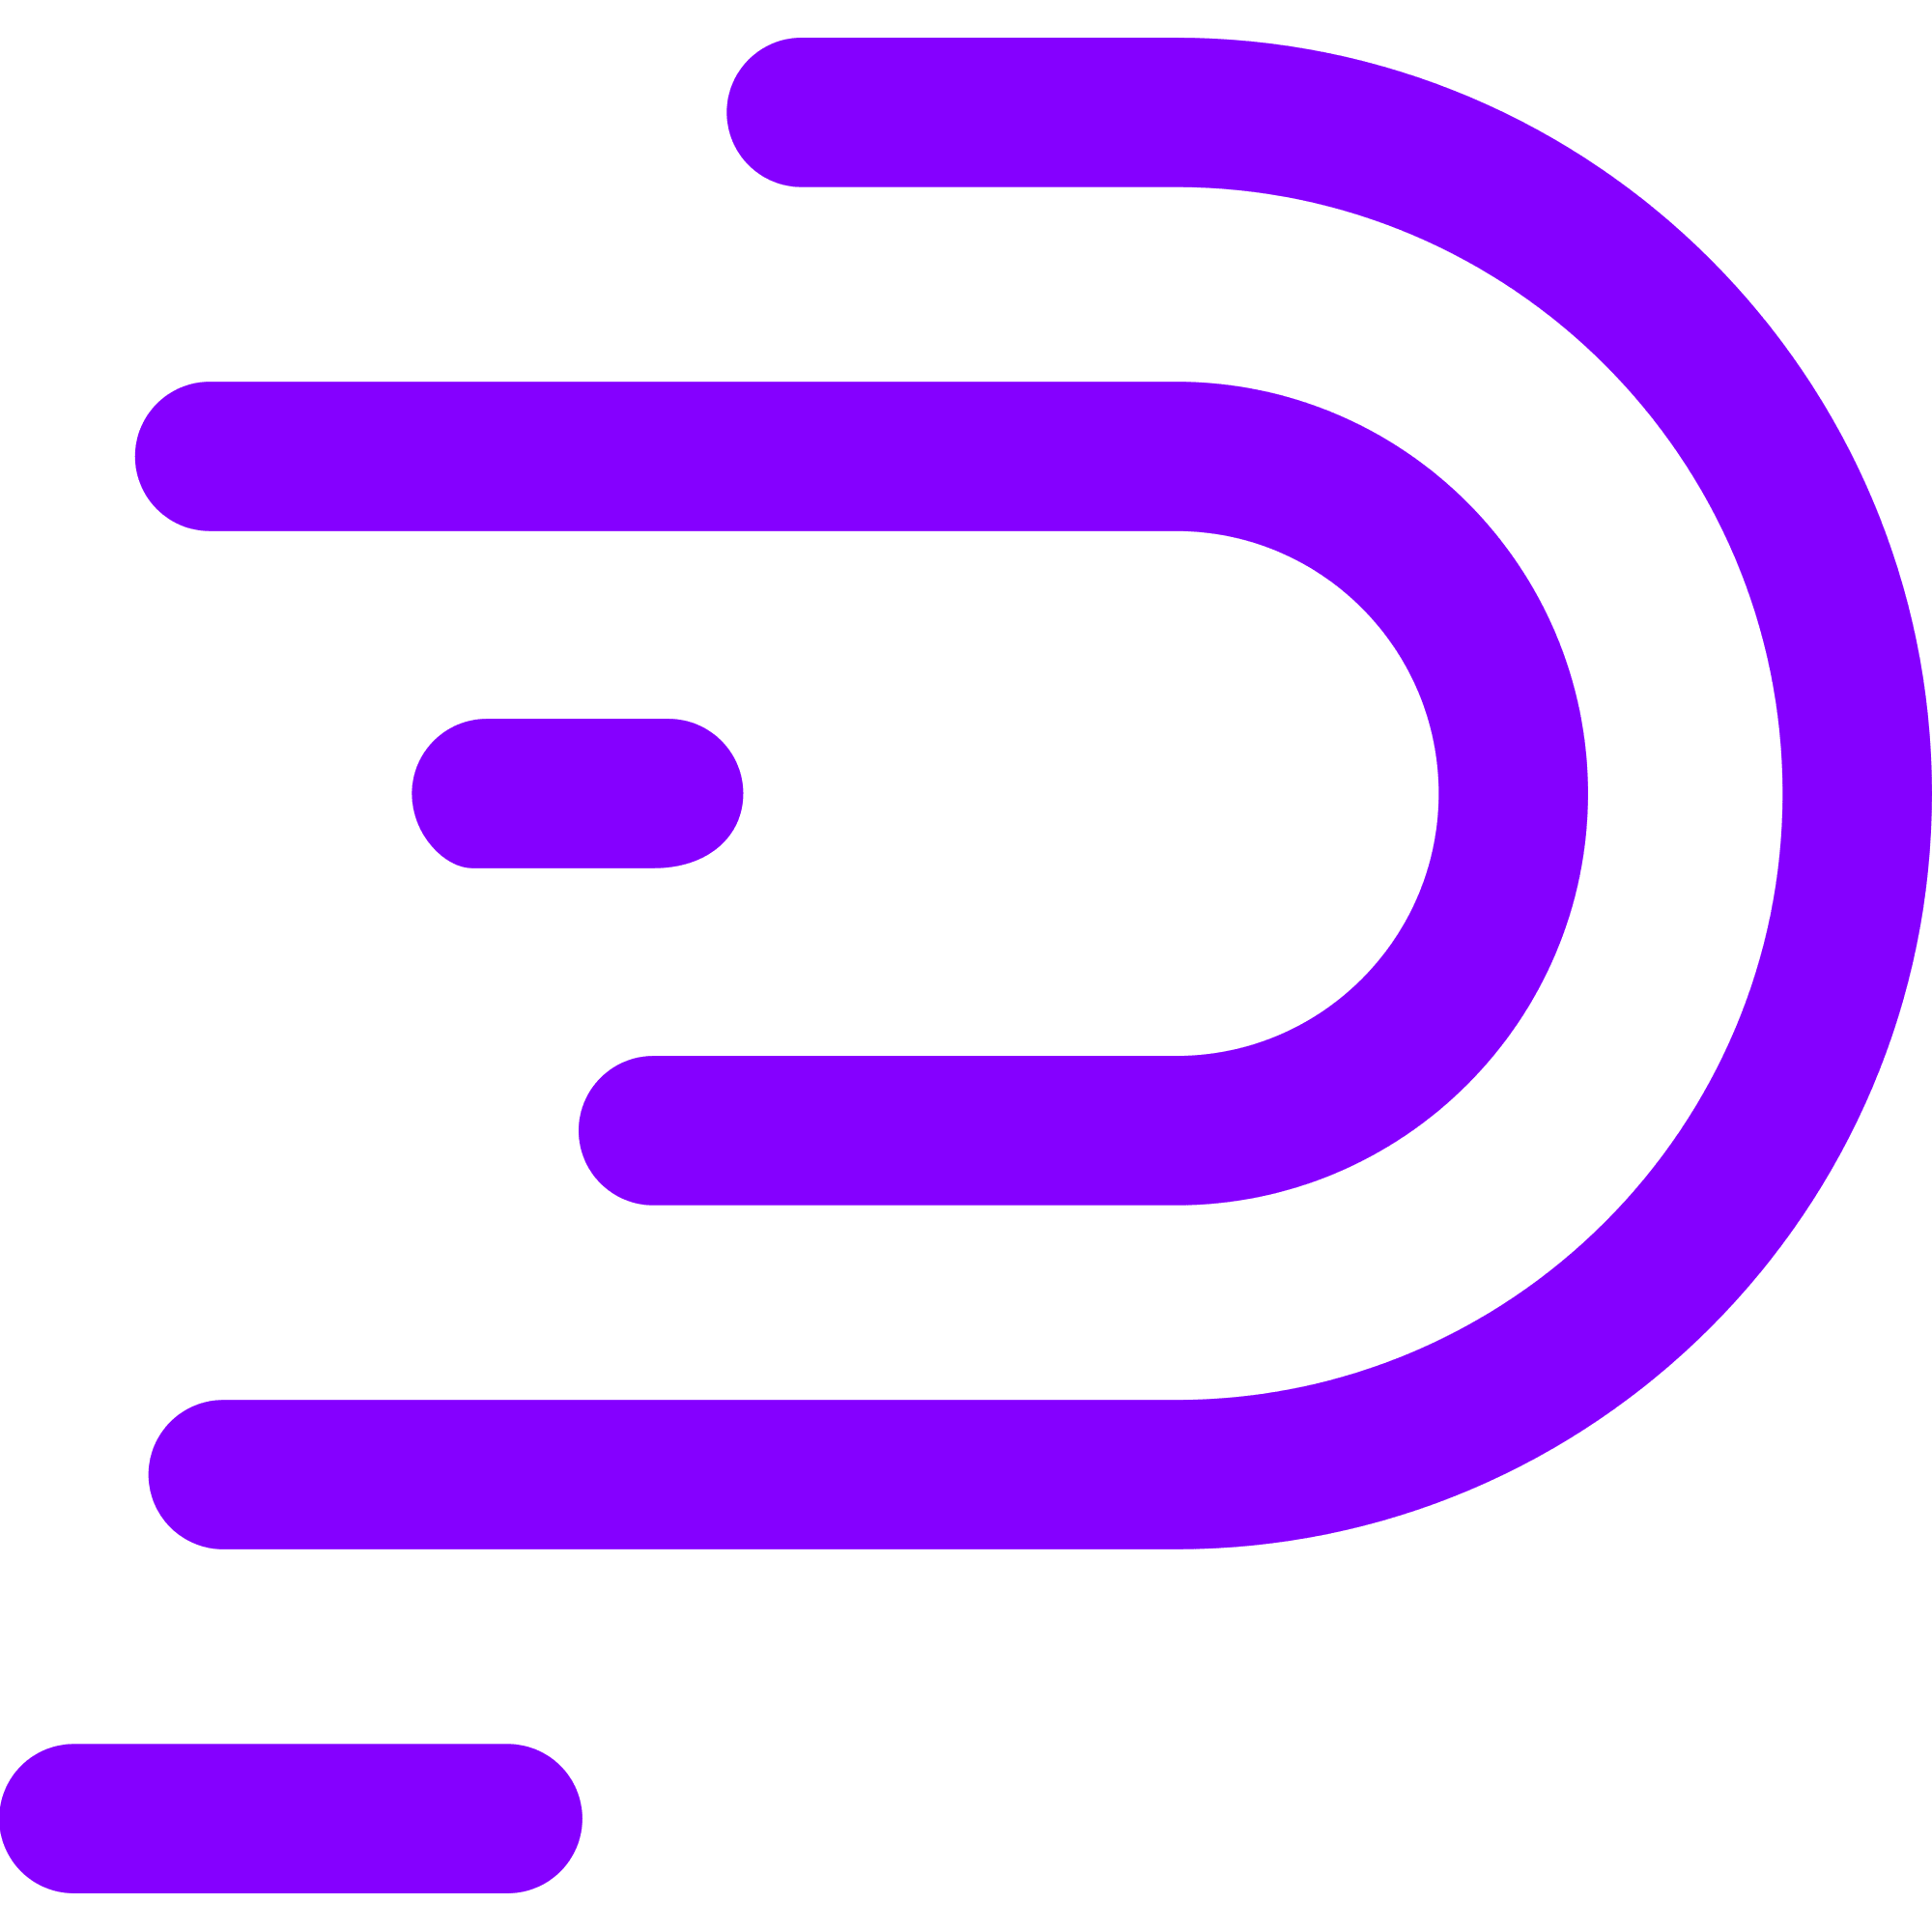 PolySwarm logo in png format